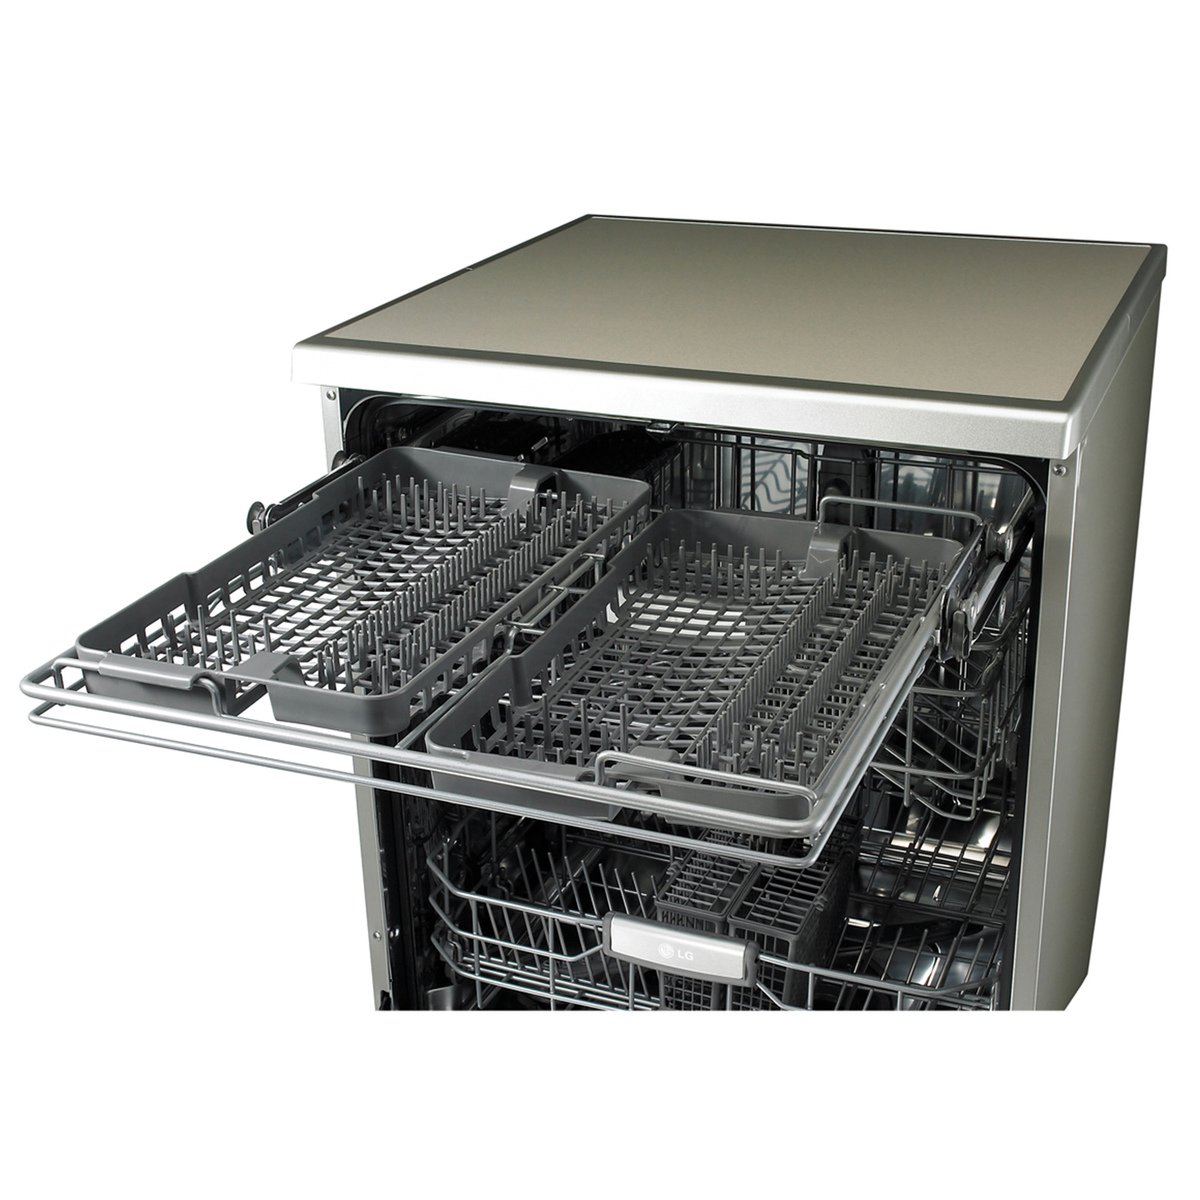 LG Dishwasher D1452WF 5 Programs